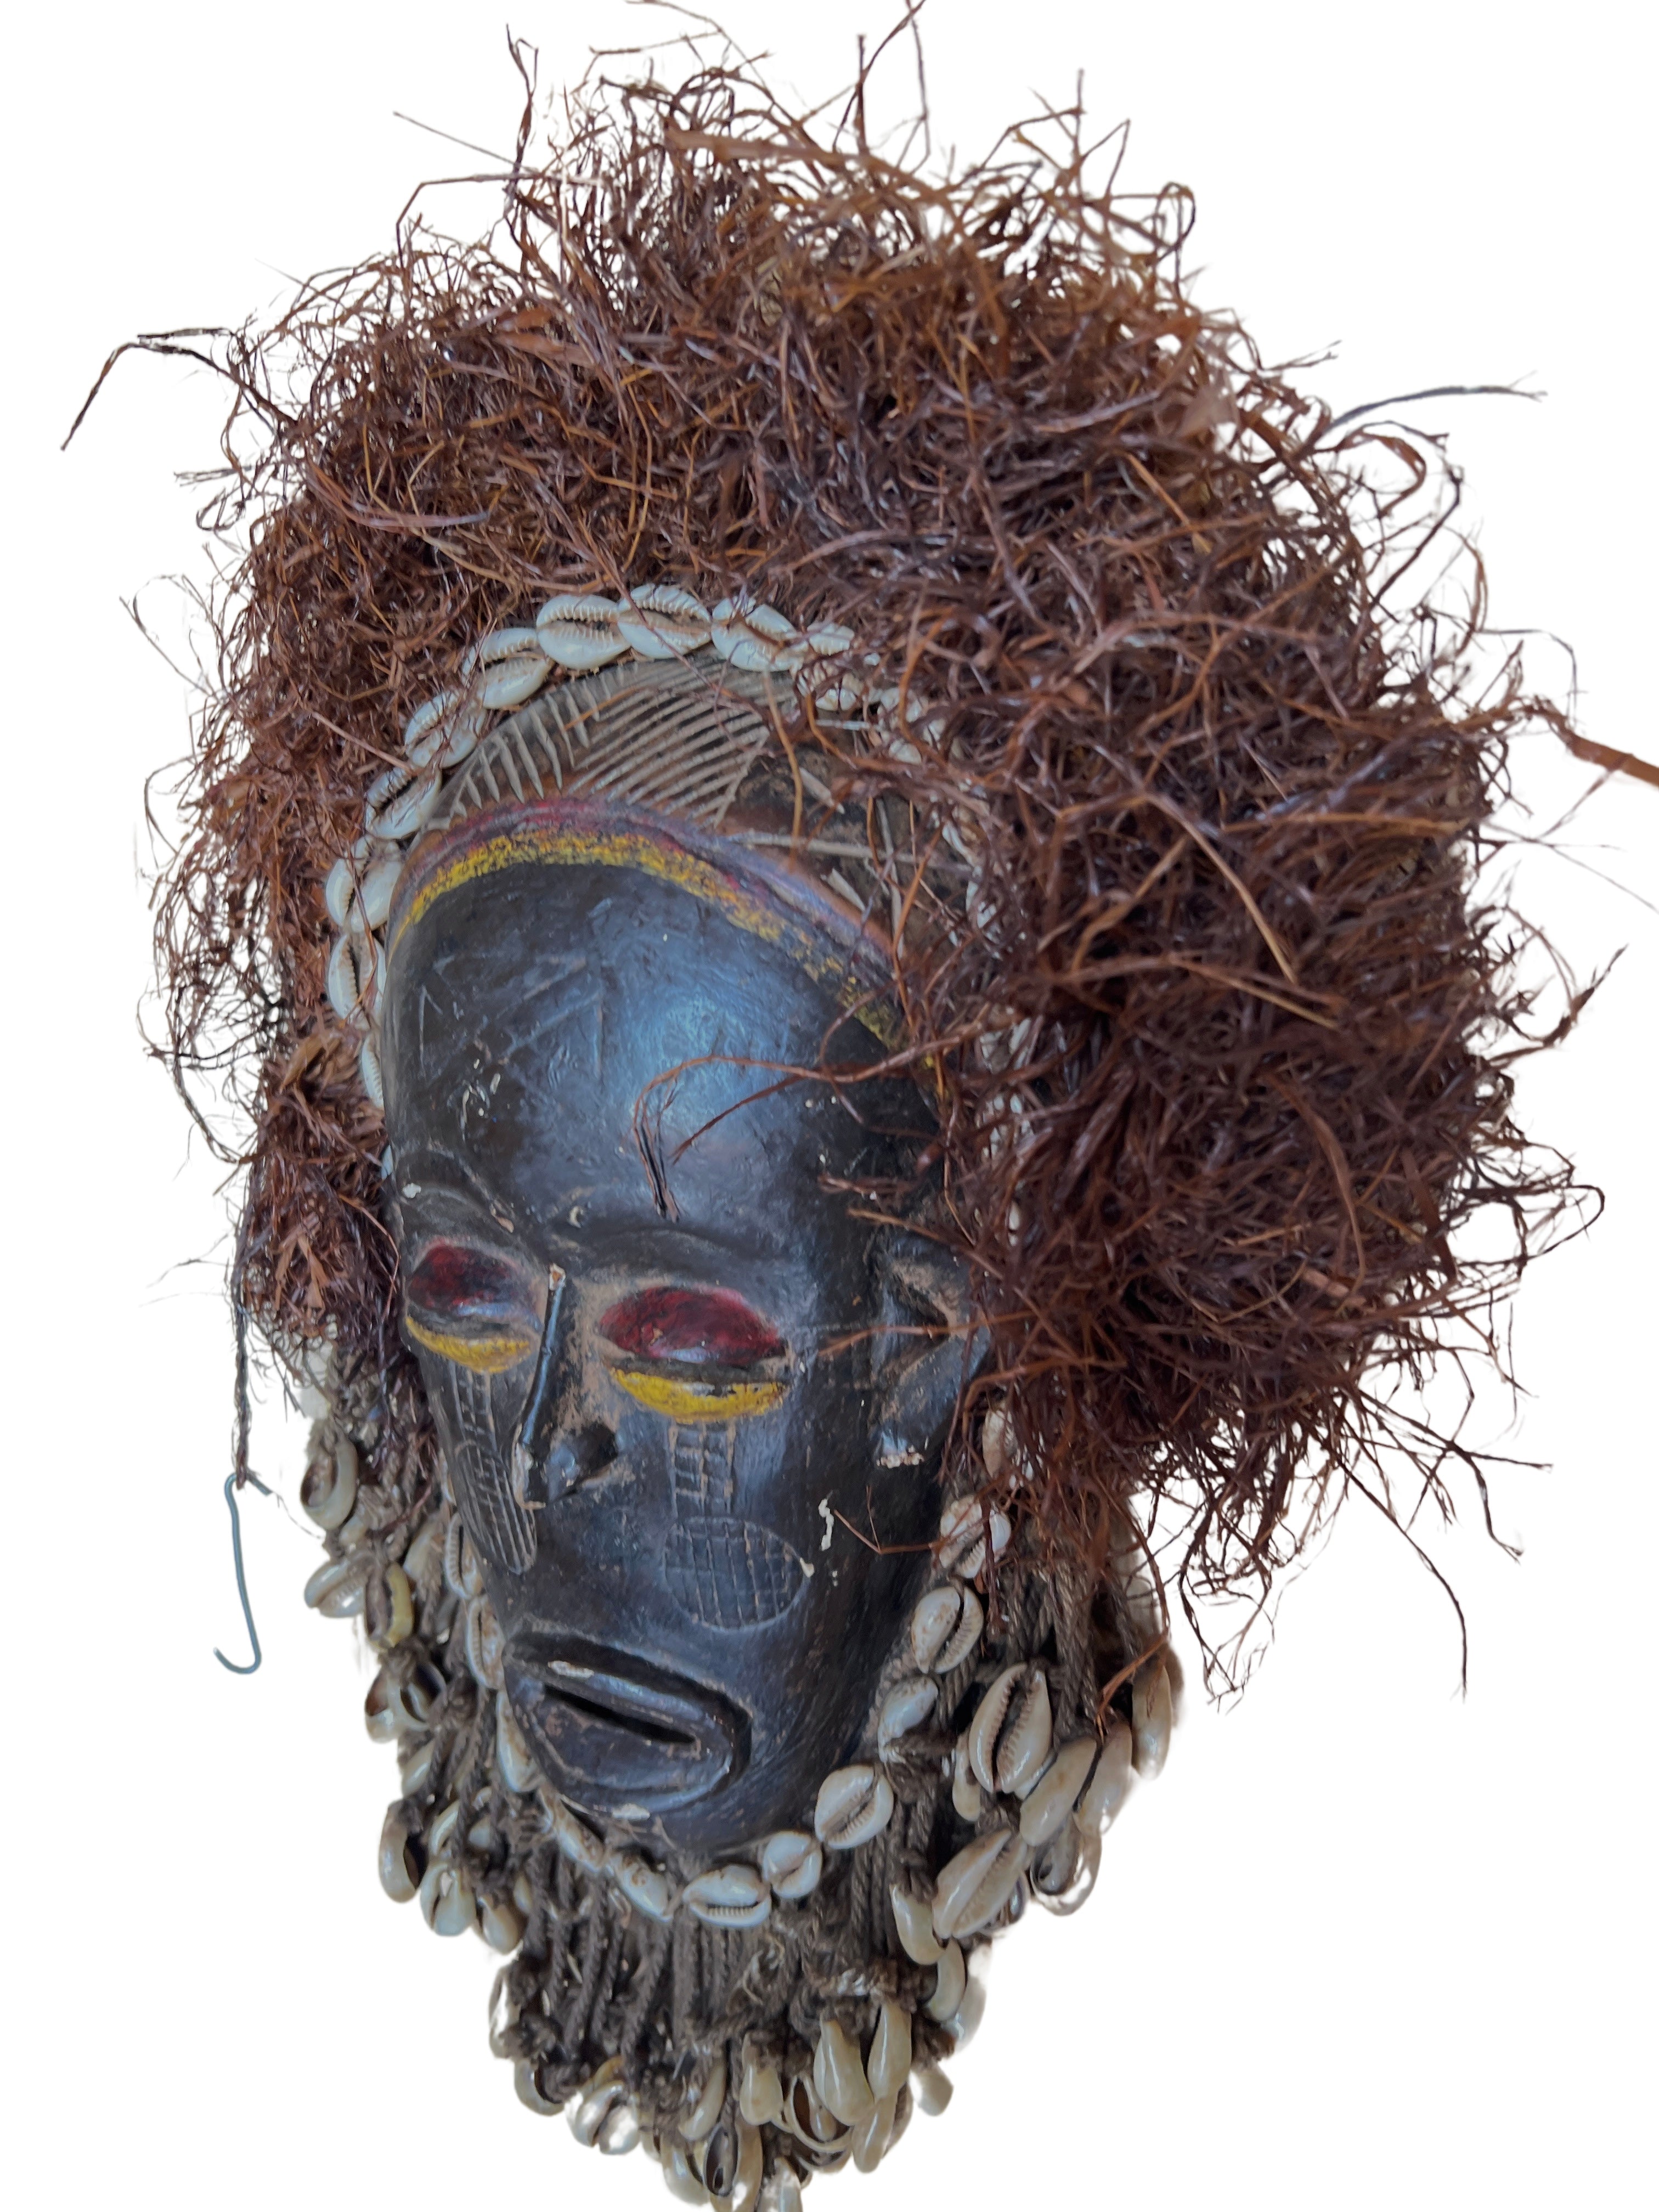 Chokwe Tribe Mask - Chokwe